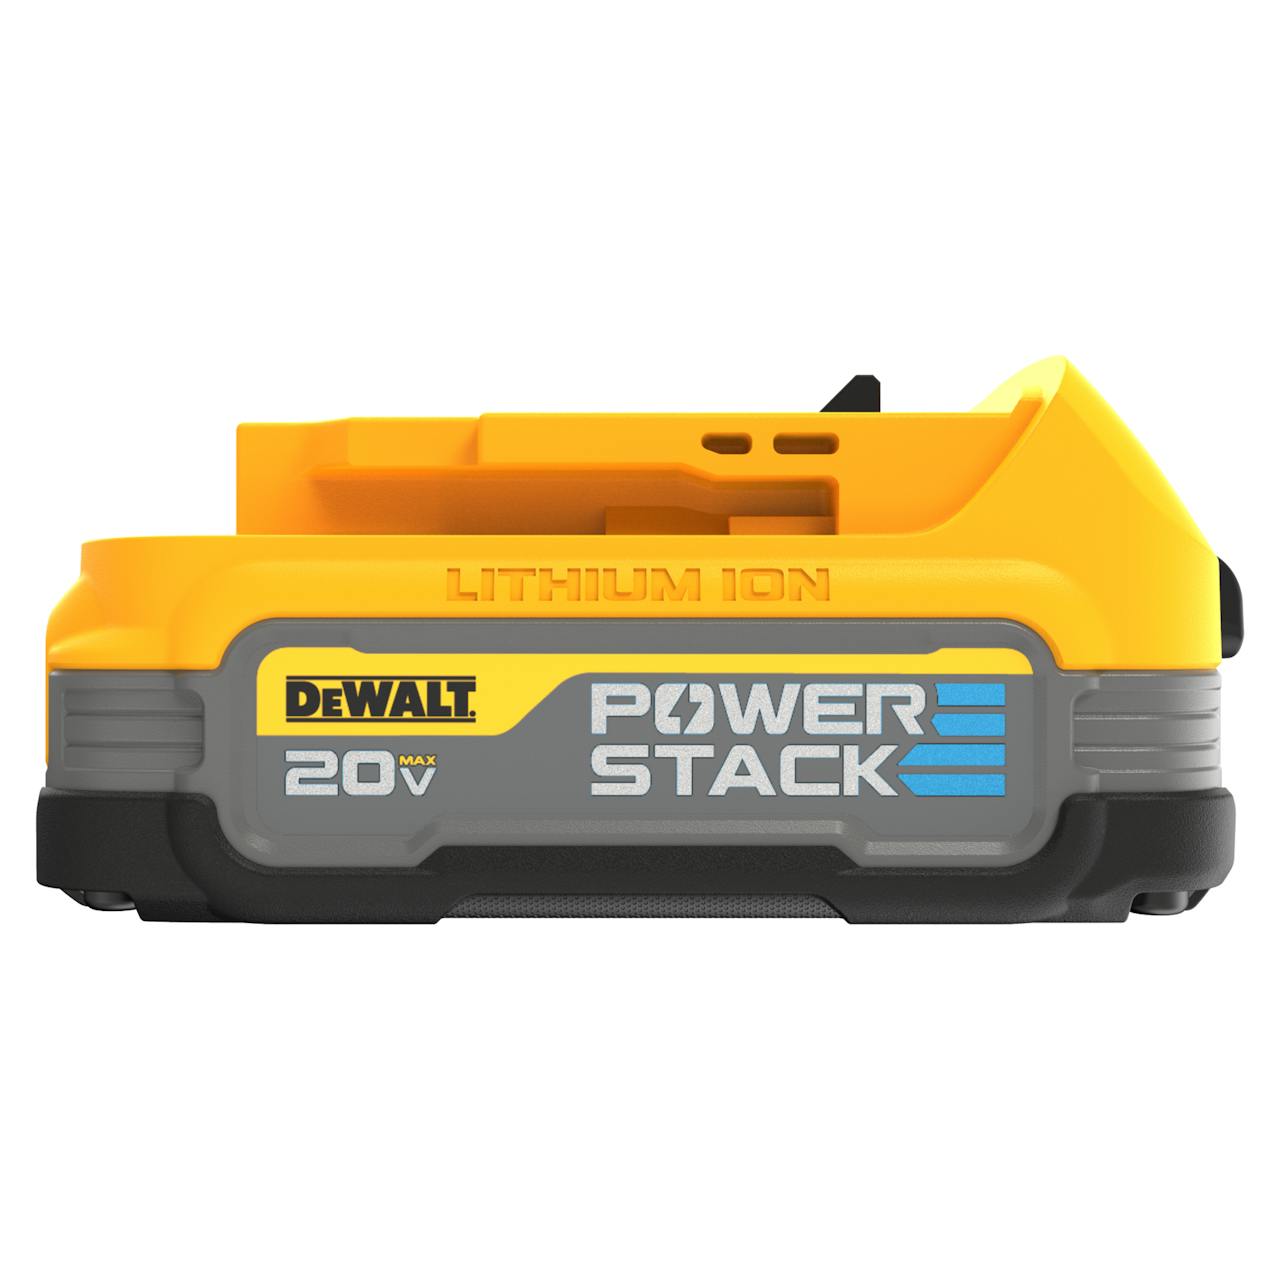 The DeWalt POWERSTACK 20V MAX Compact Battery